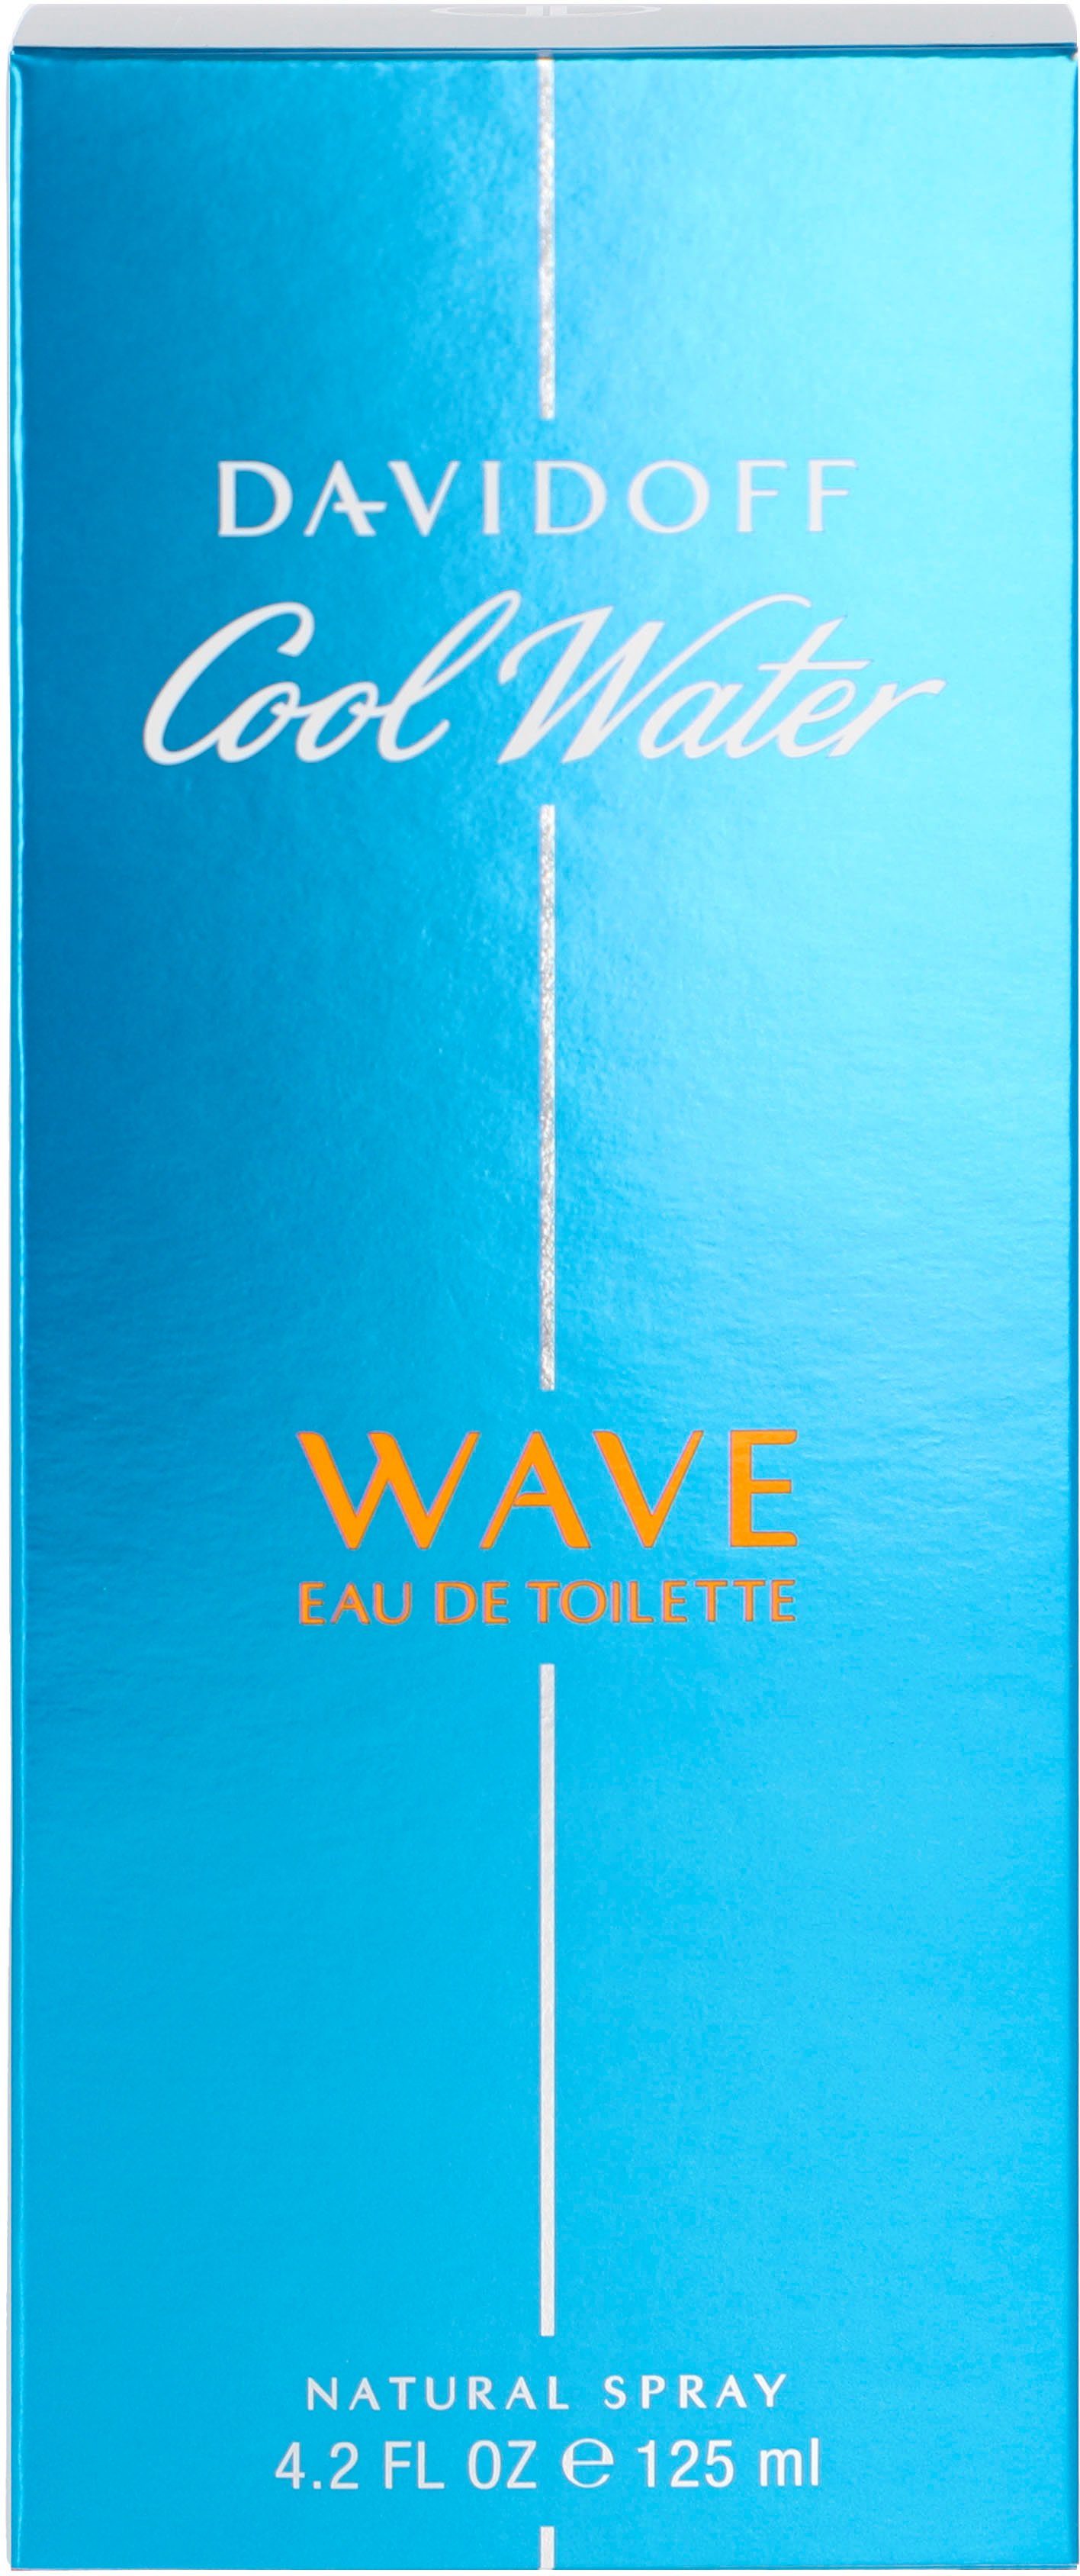 Eau DAVIDOFF Man de Water Toilette Davidoff Cool Wave